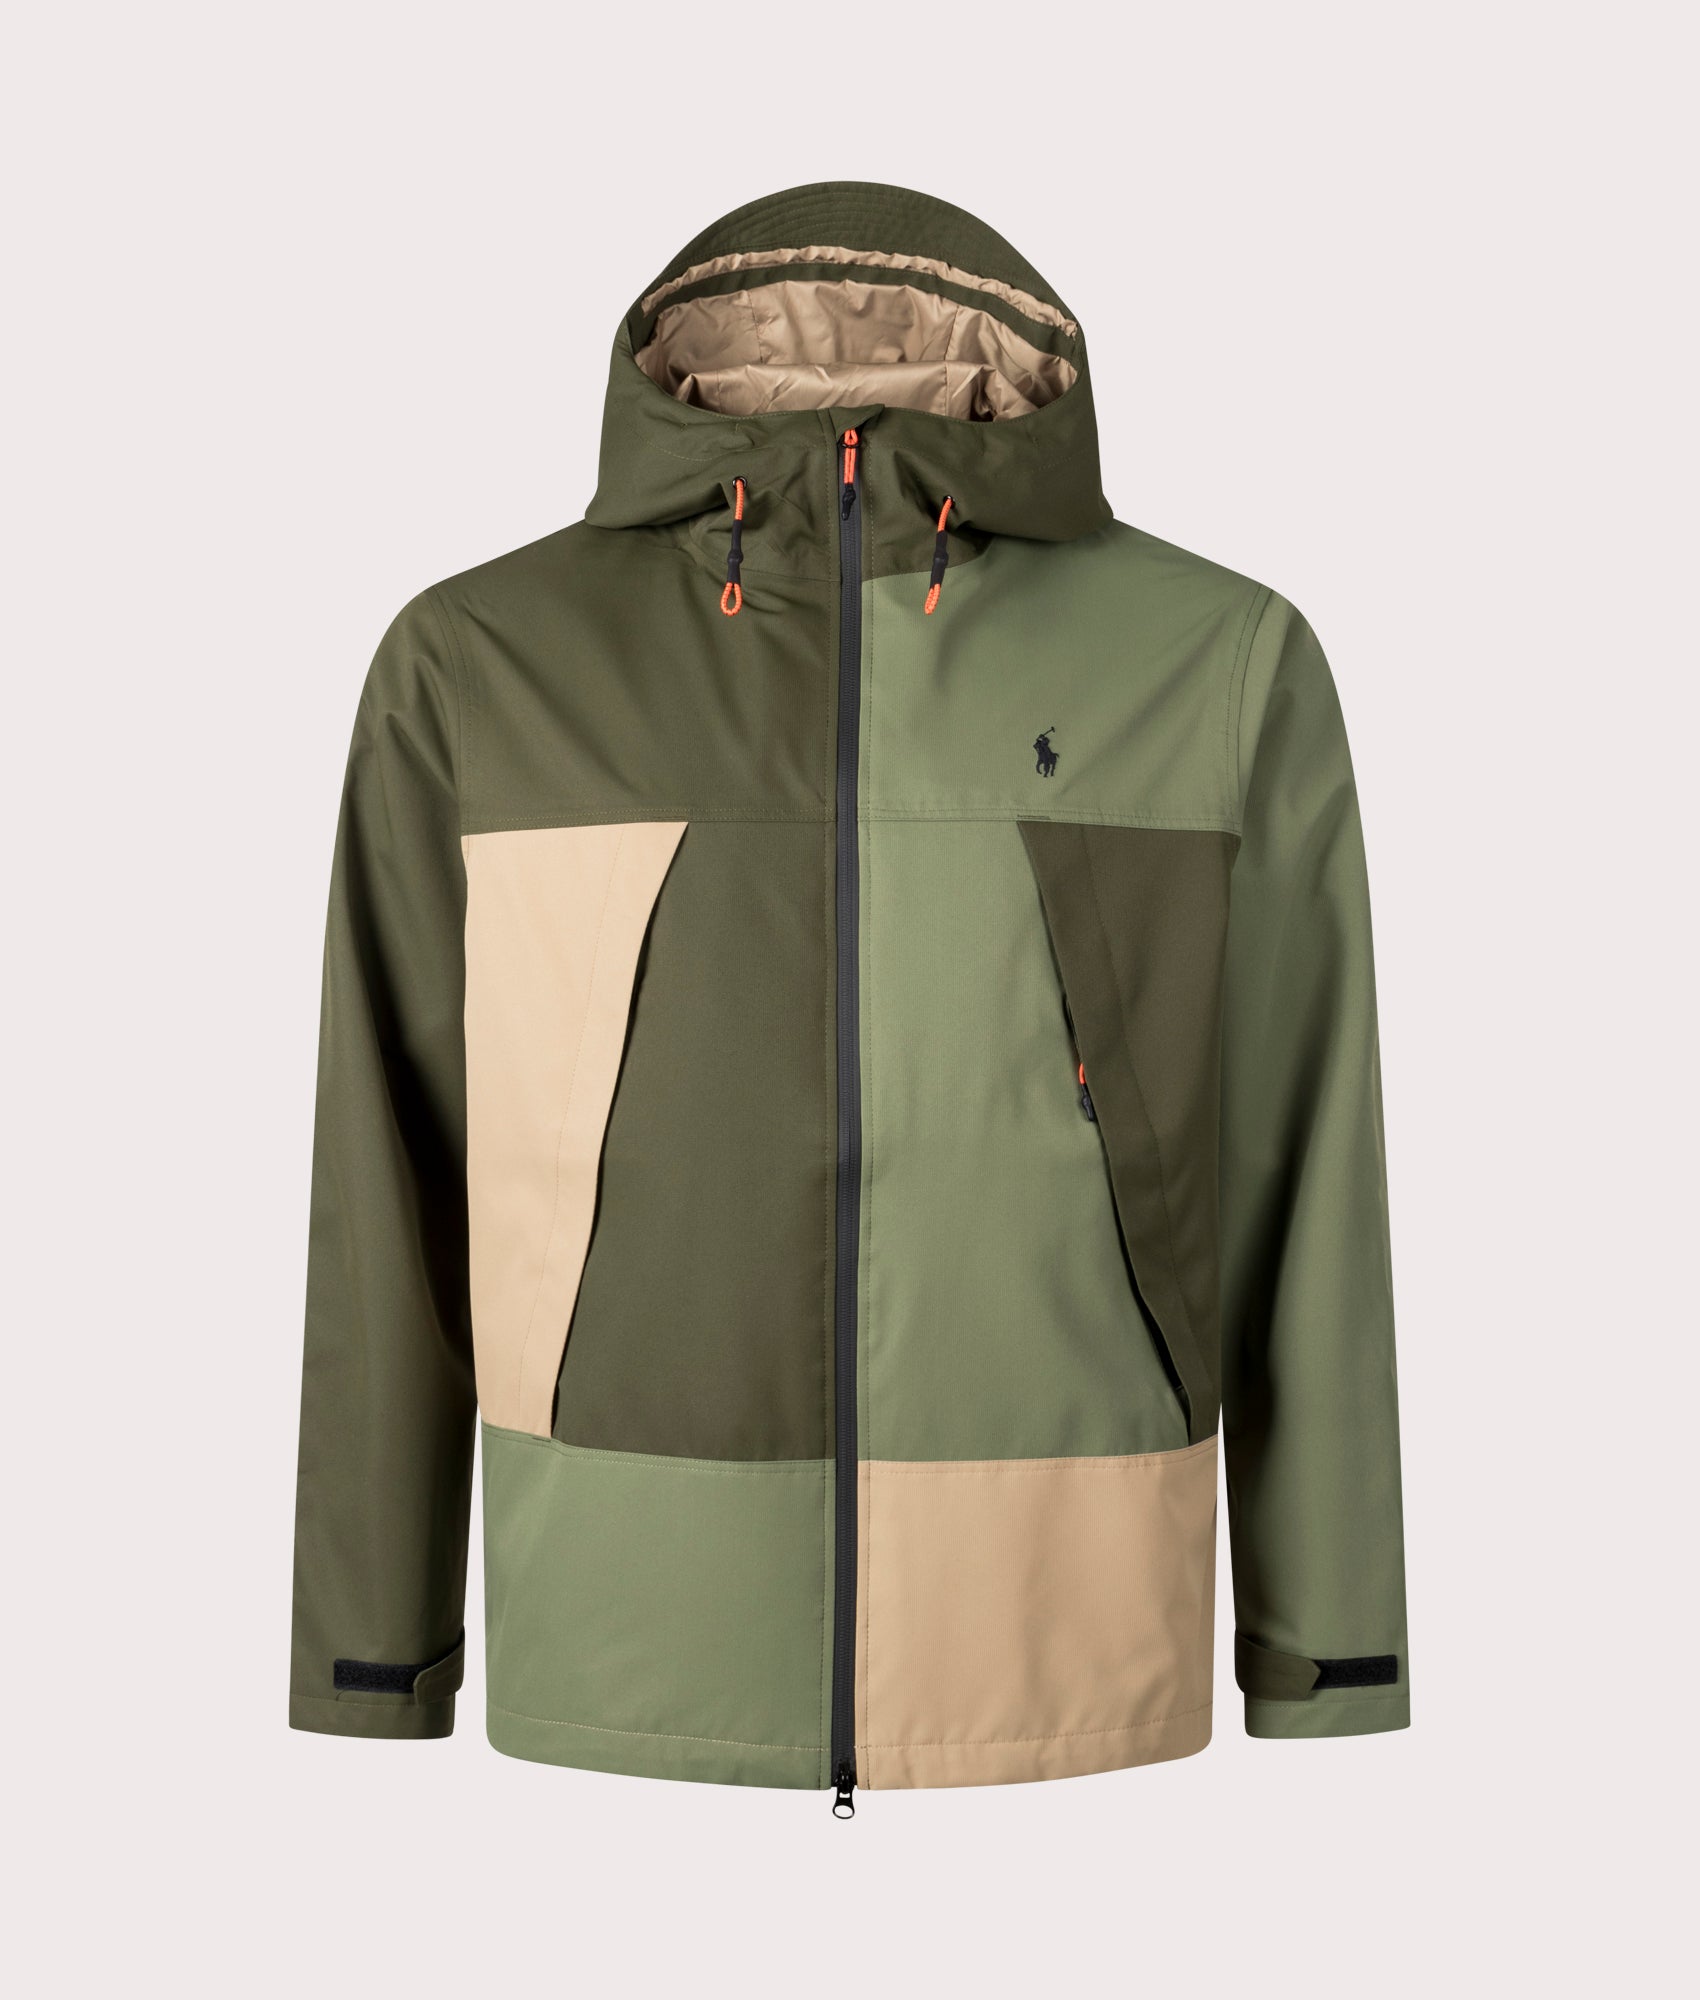 Polo Ralph Lauren Mens Eastland Lined Jacket - Colour: 001 Garden Trail Multi - Size: Small